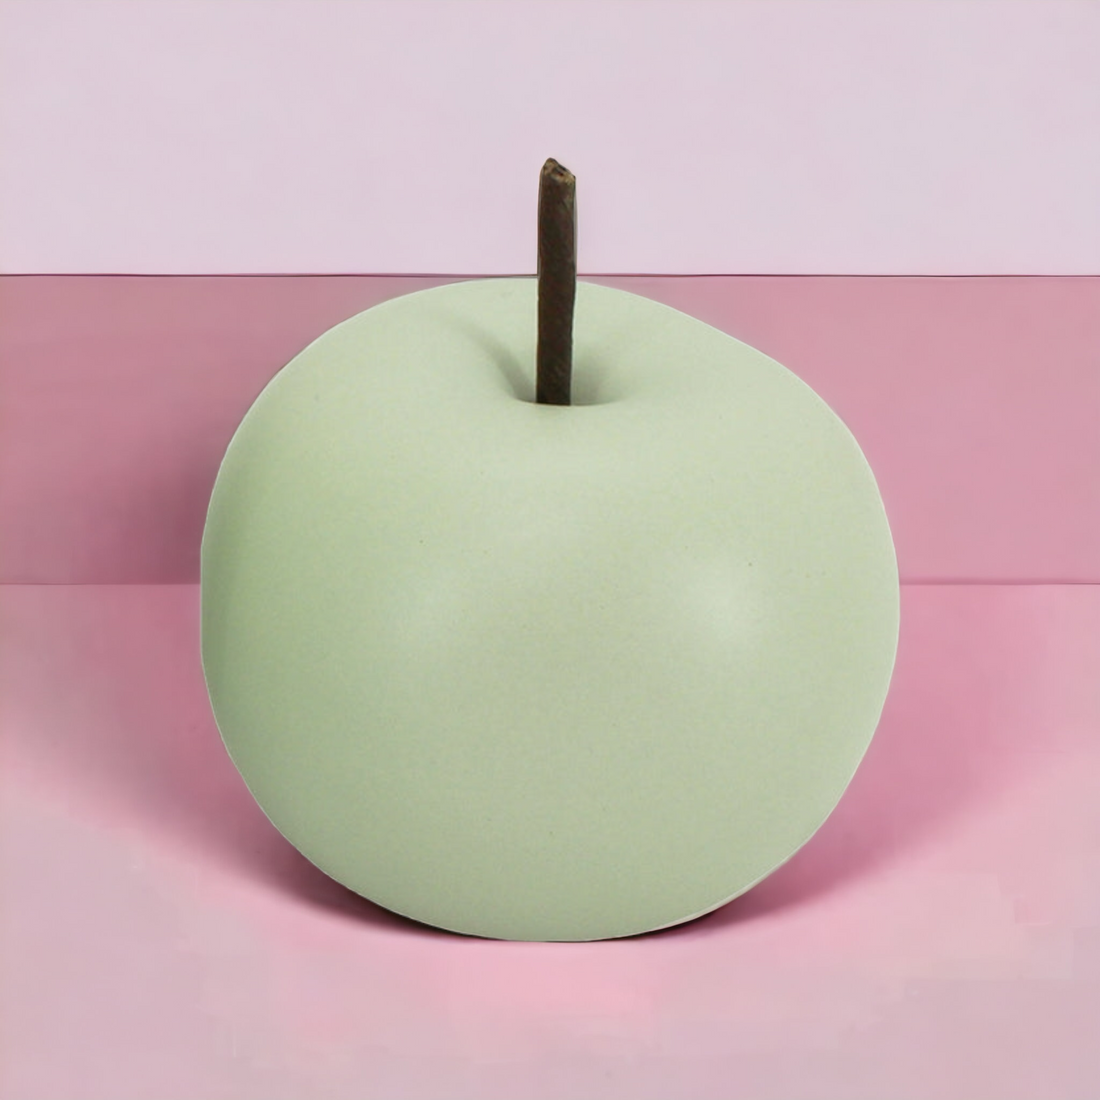 Eden Green Apple (Small)